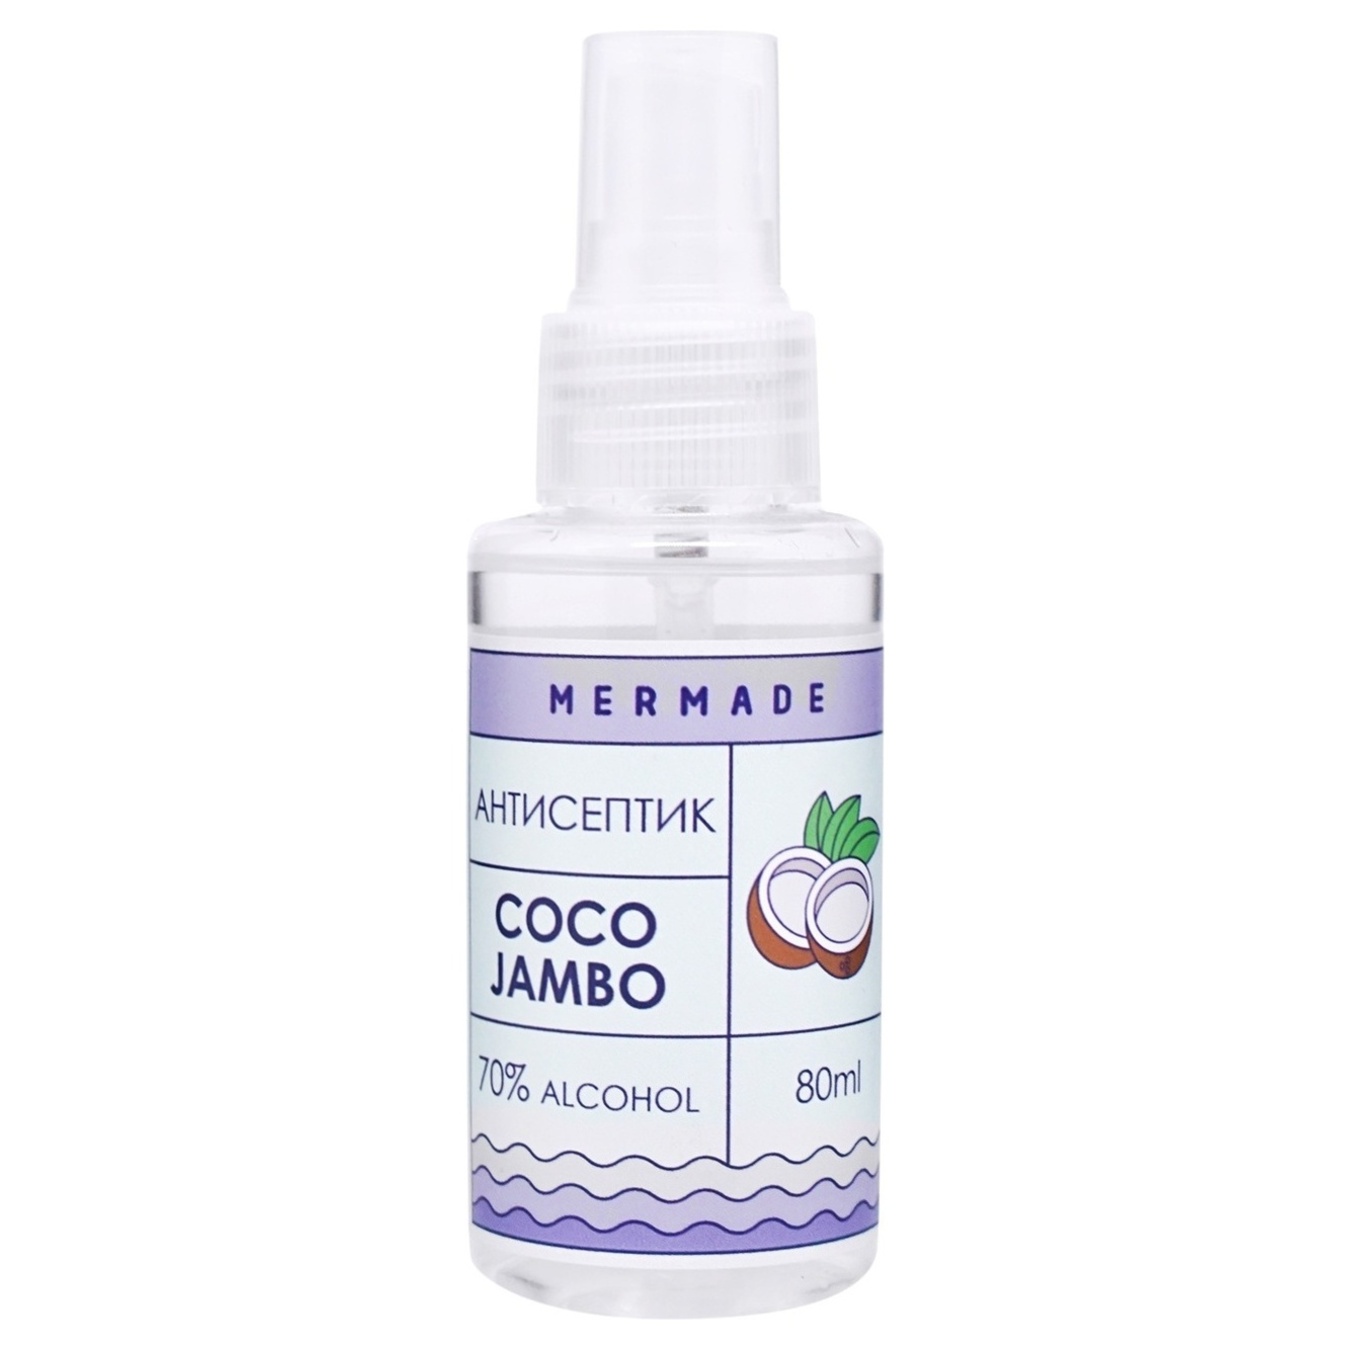 Mermade Coco Jambo For Hands Antiseptic Spray 80ml